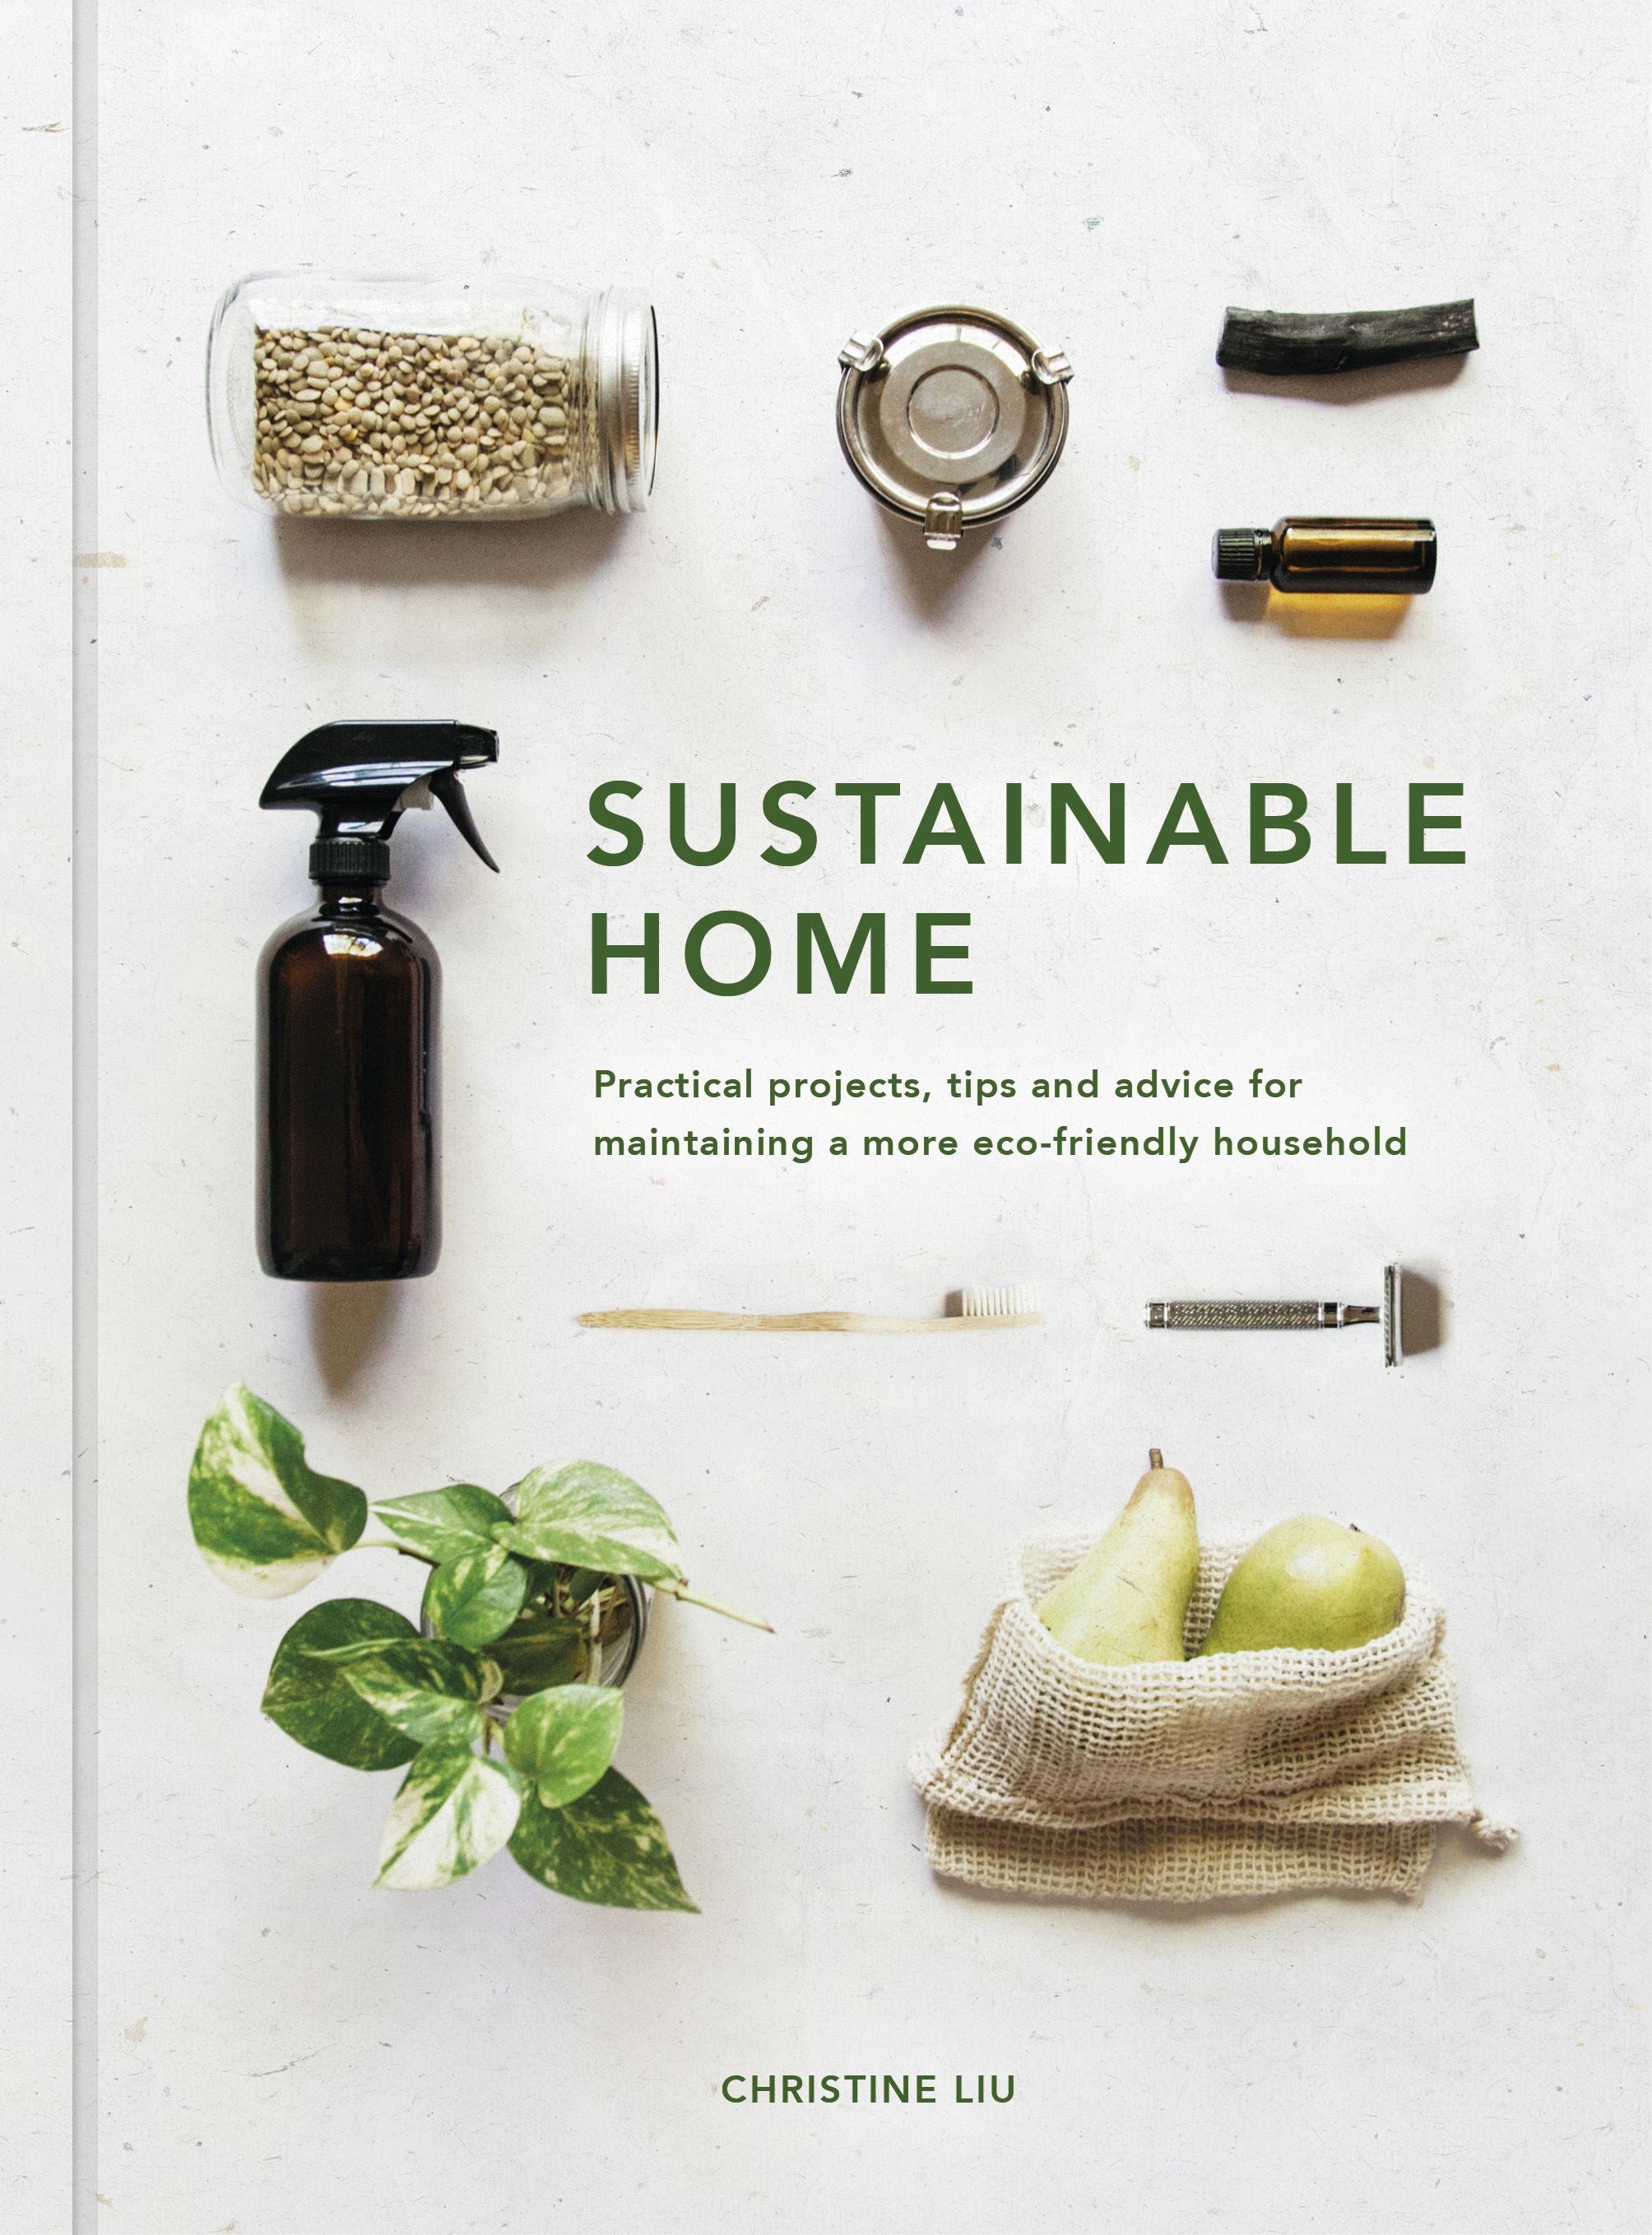 Sustainable Home | Book | Christine Liu - Lifestory